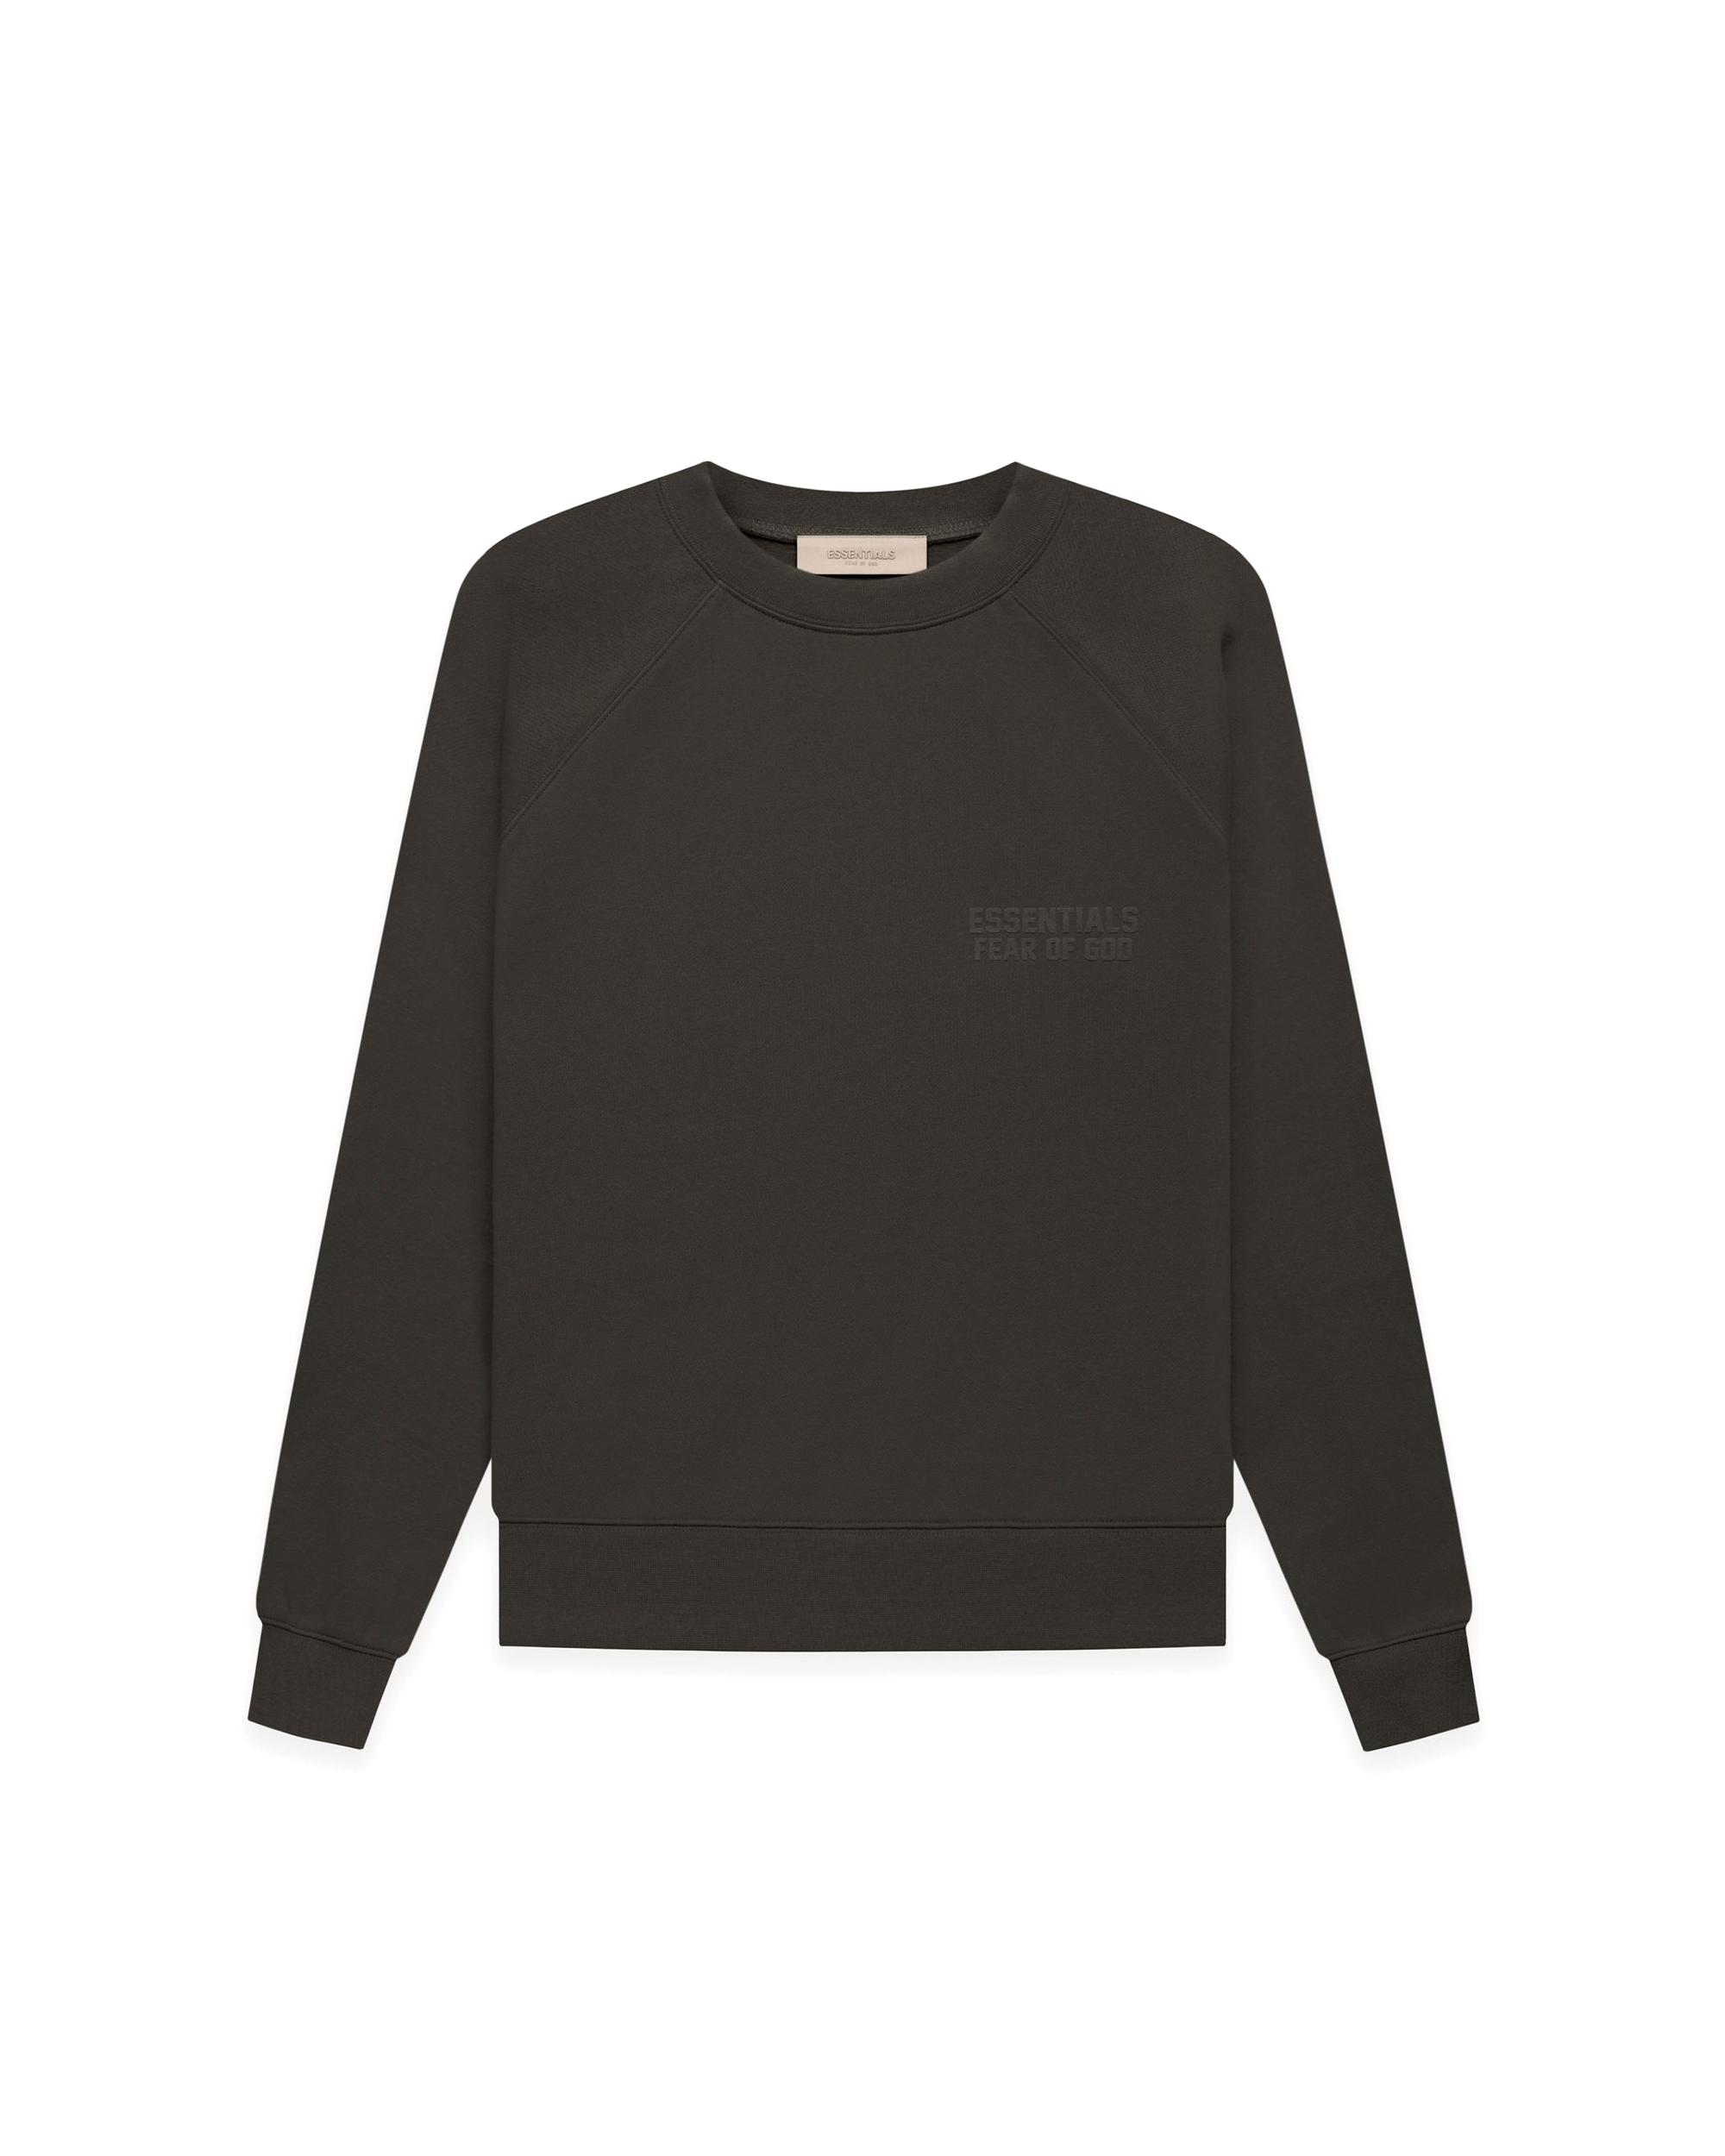 Essentials Crewneck Sweatshirt - Off Black / Off Black